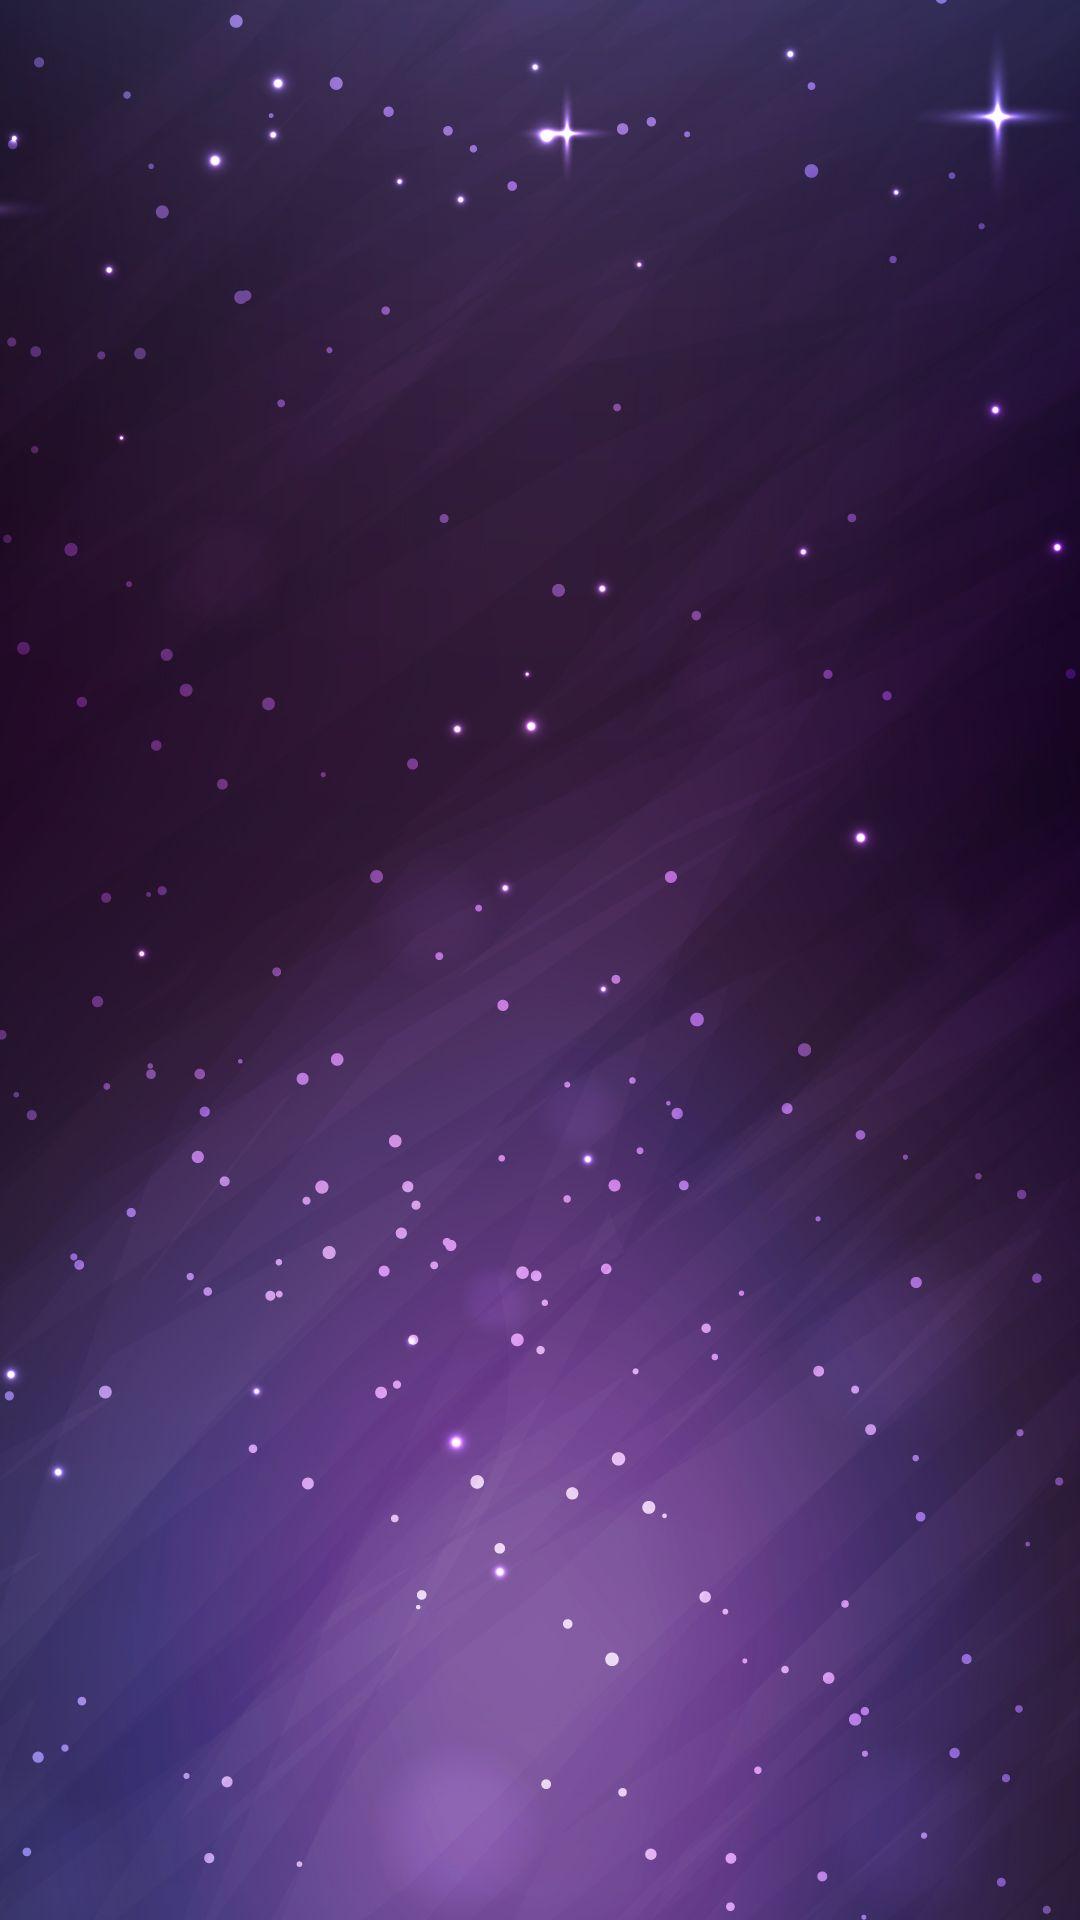 Free HD Purple Space Phone Wallpaper.5587